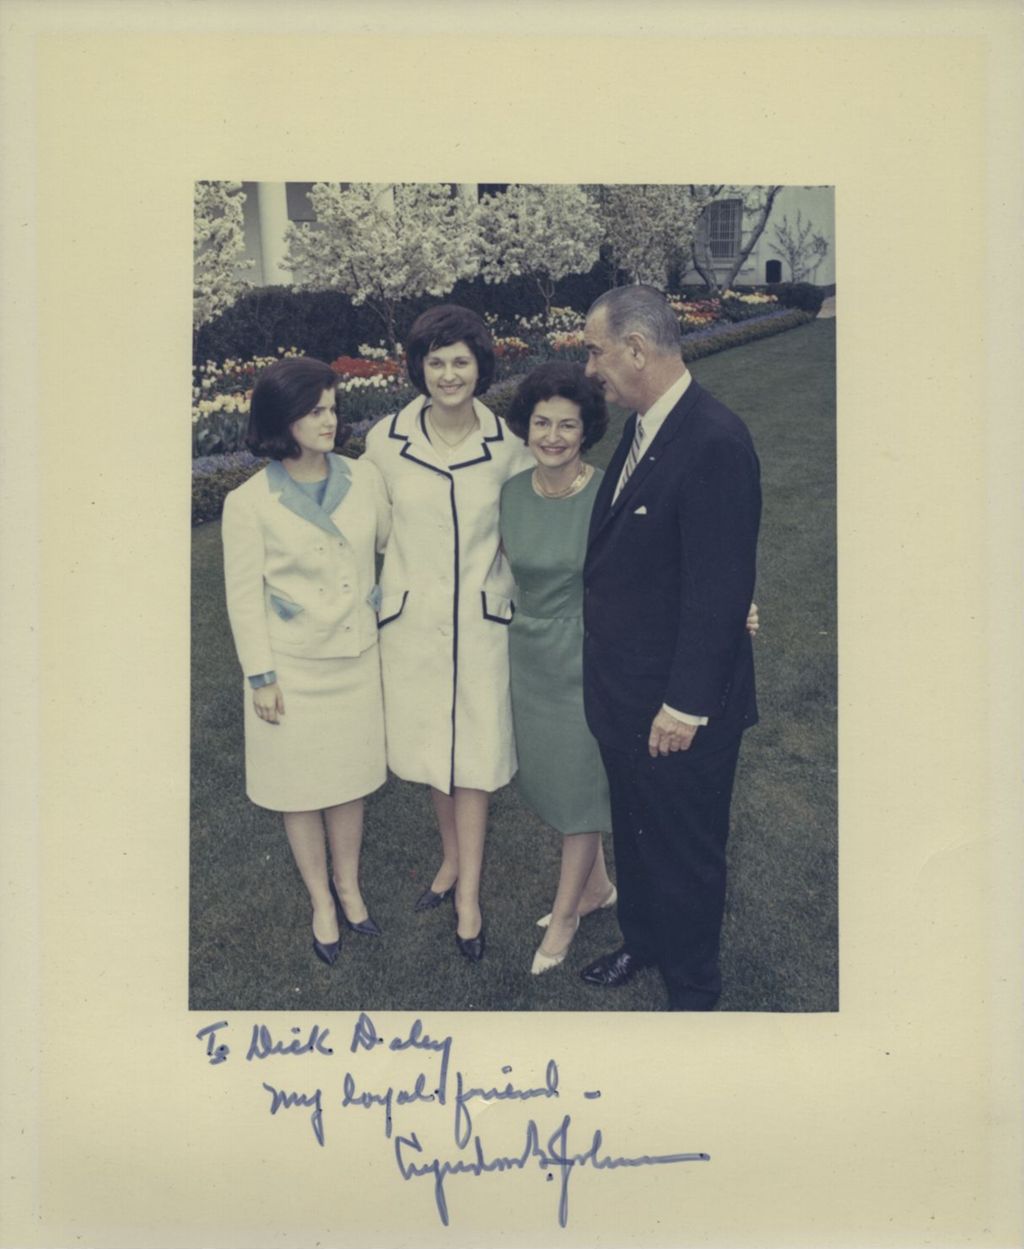 Miniature of President Lyndon B. Johnson and family